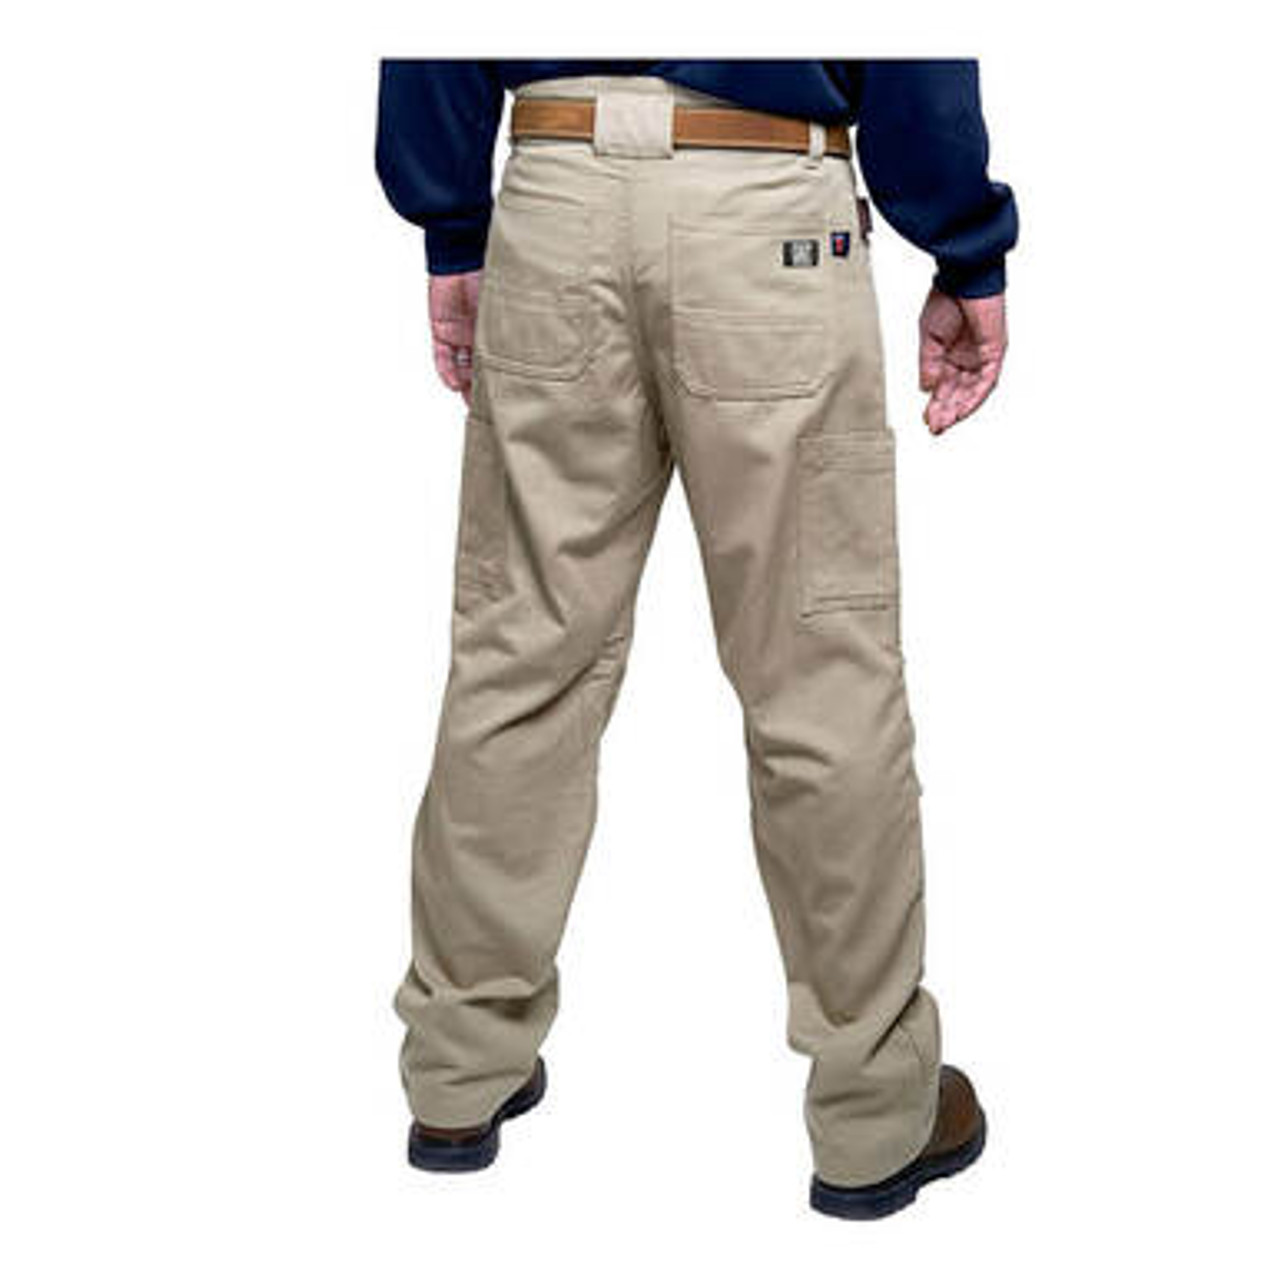 P24NV Men's Cargo Industrial Work Pant, Navy Blue Industrial Pants